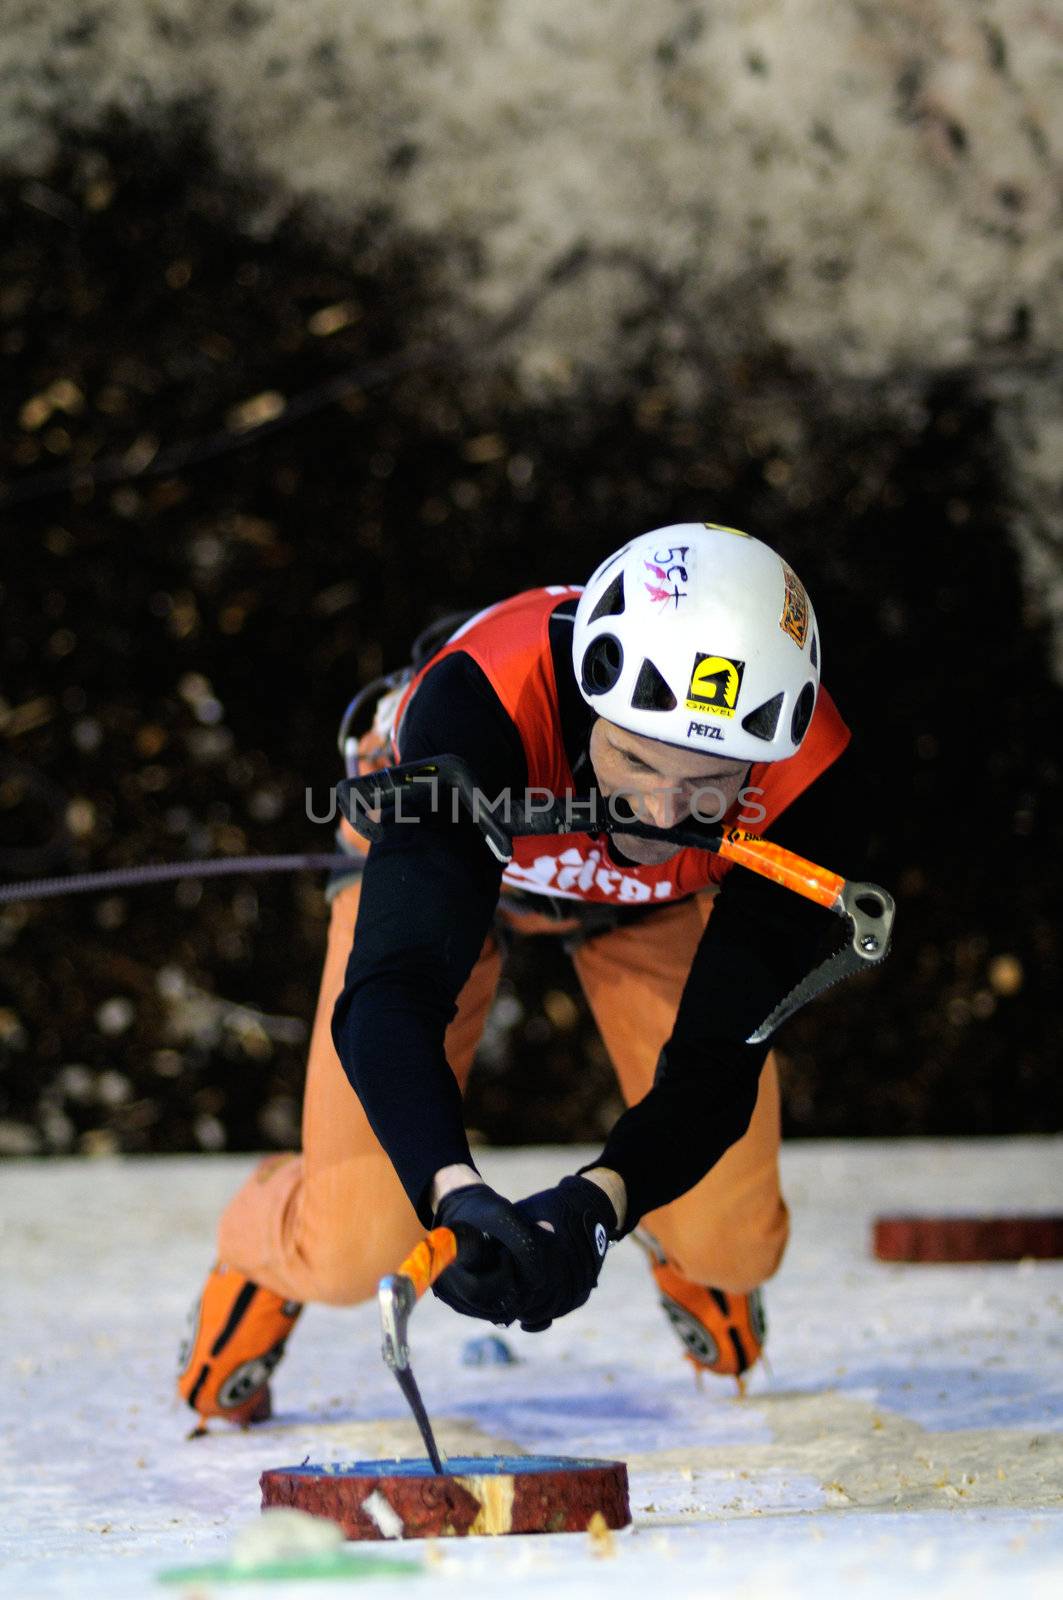 UNKEN, AUSTRIA - FEB 19: Ice climbing european cup finals. Benedikt Purner climbing at the night finals on February 19, 2011 in Heutal, Unken in Austria.